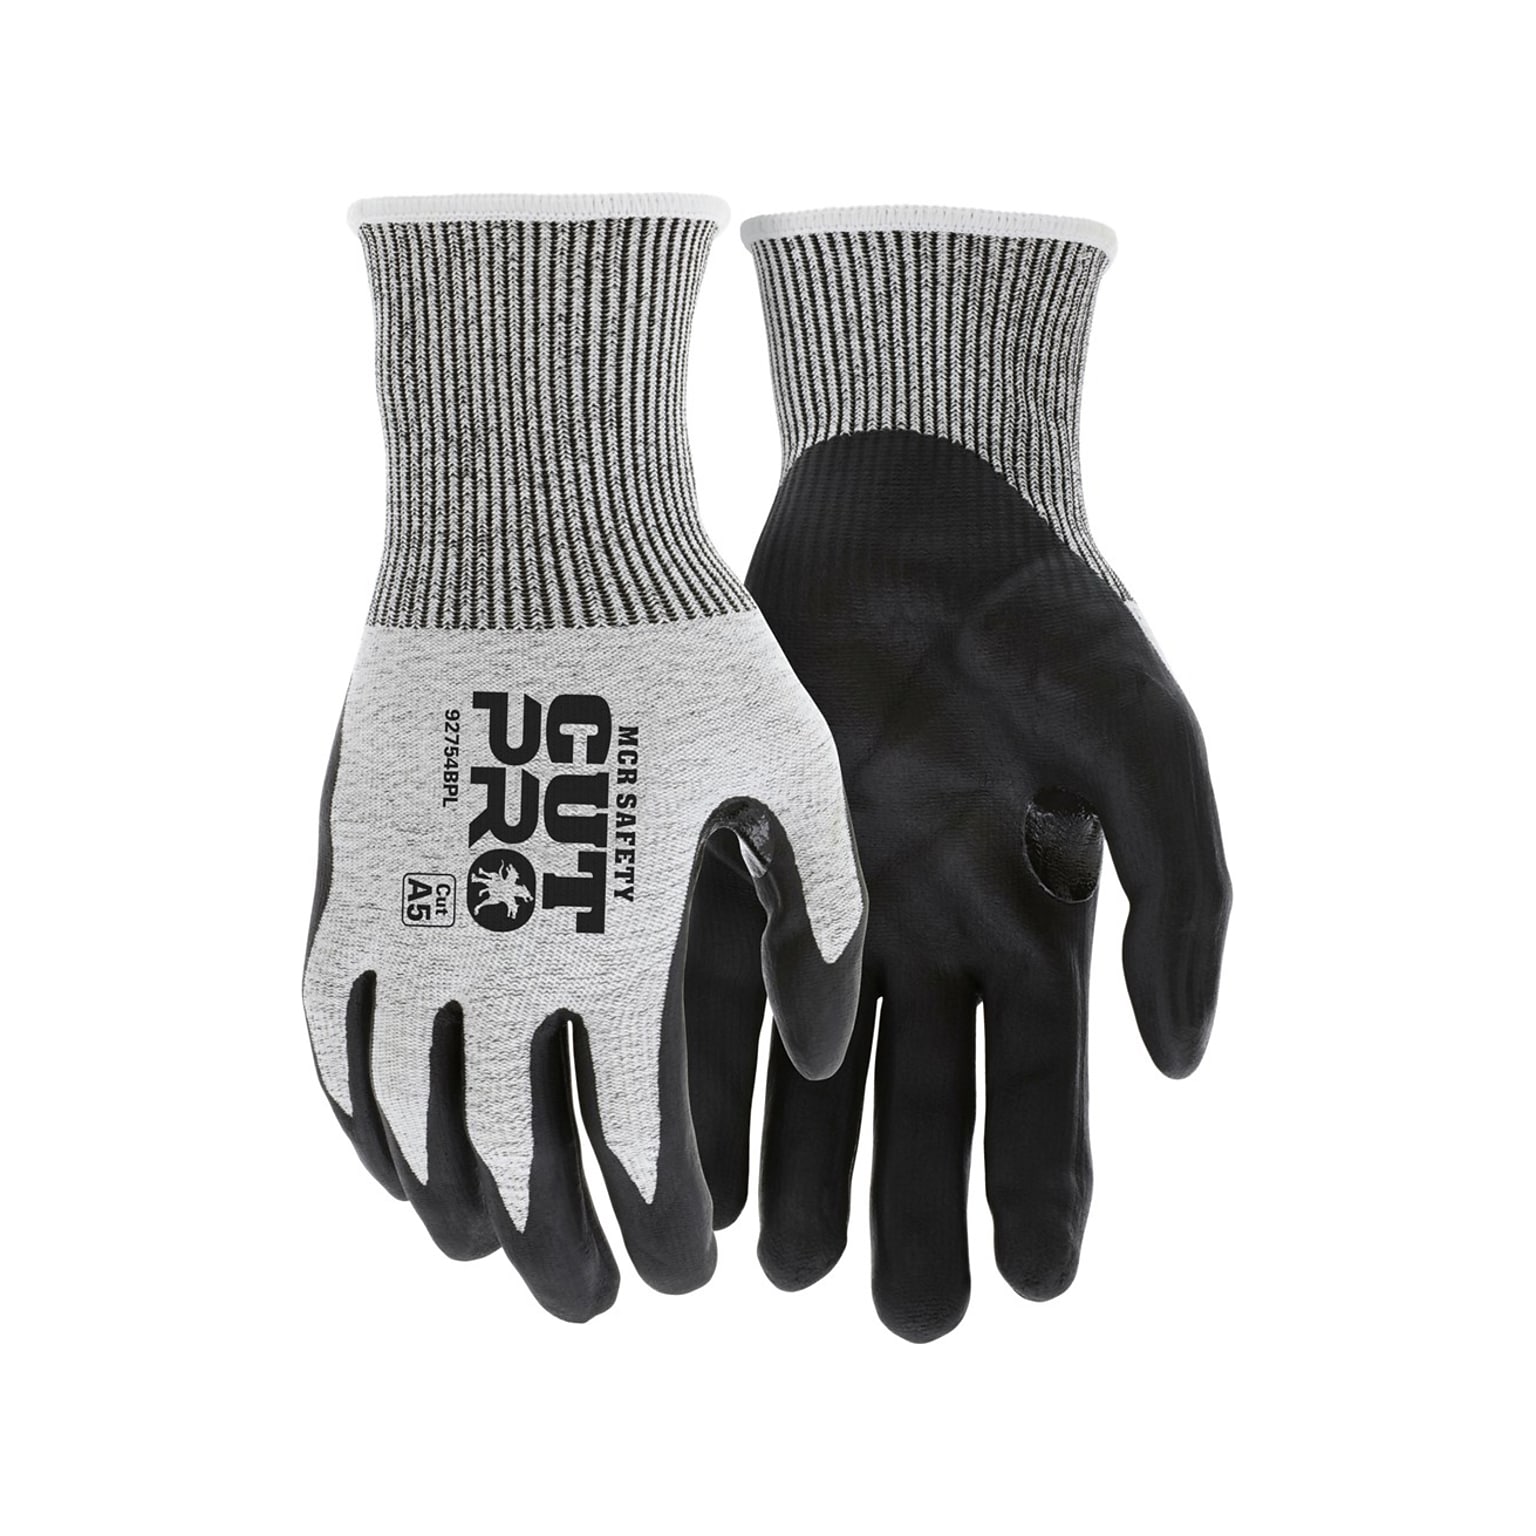 MCR Safety Cut Pro Hypermax Fiber/Bi-Polymer Work Gloves, Salt-and-Pepper/Black, XL, Pair (92754BPXL)